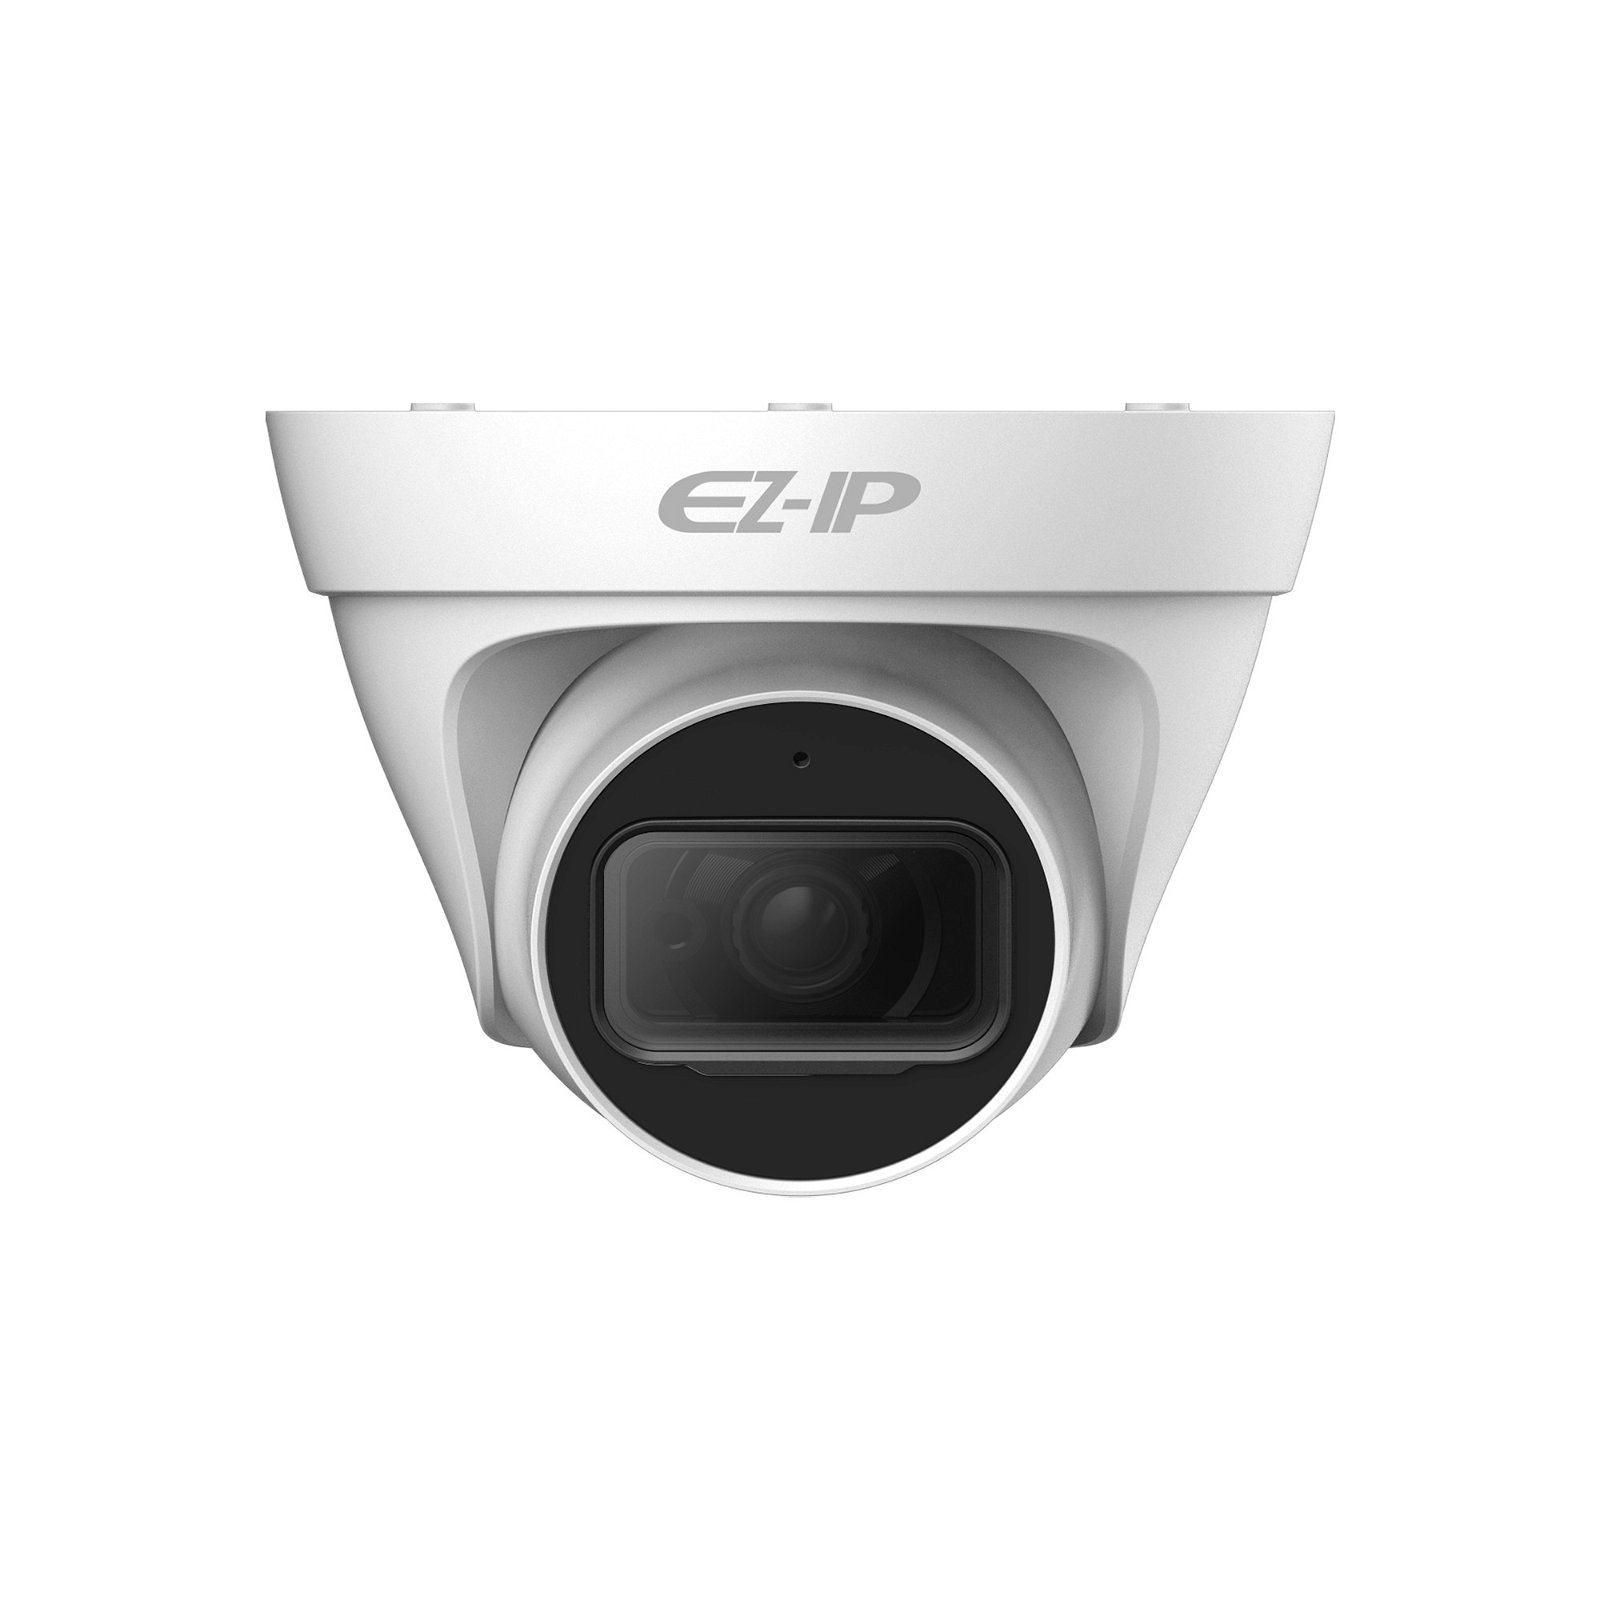 IP kamera Dahua EZ-IP 4Mpx, 2,8 mm, PoE